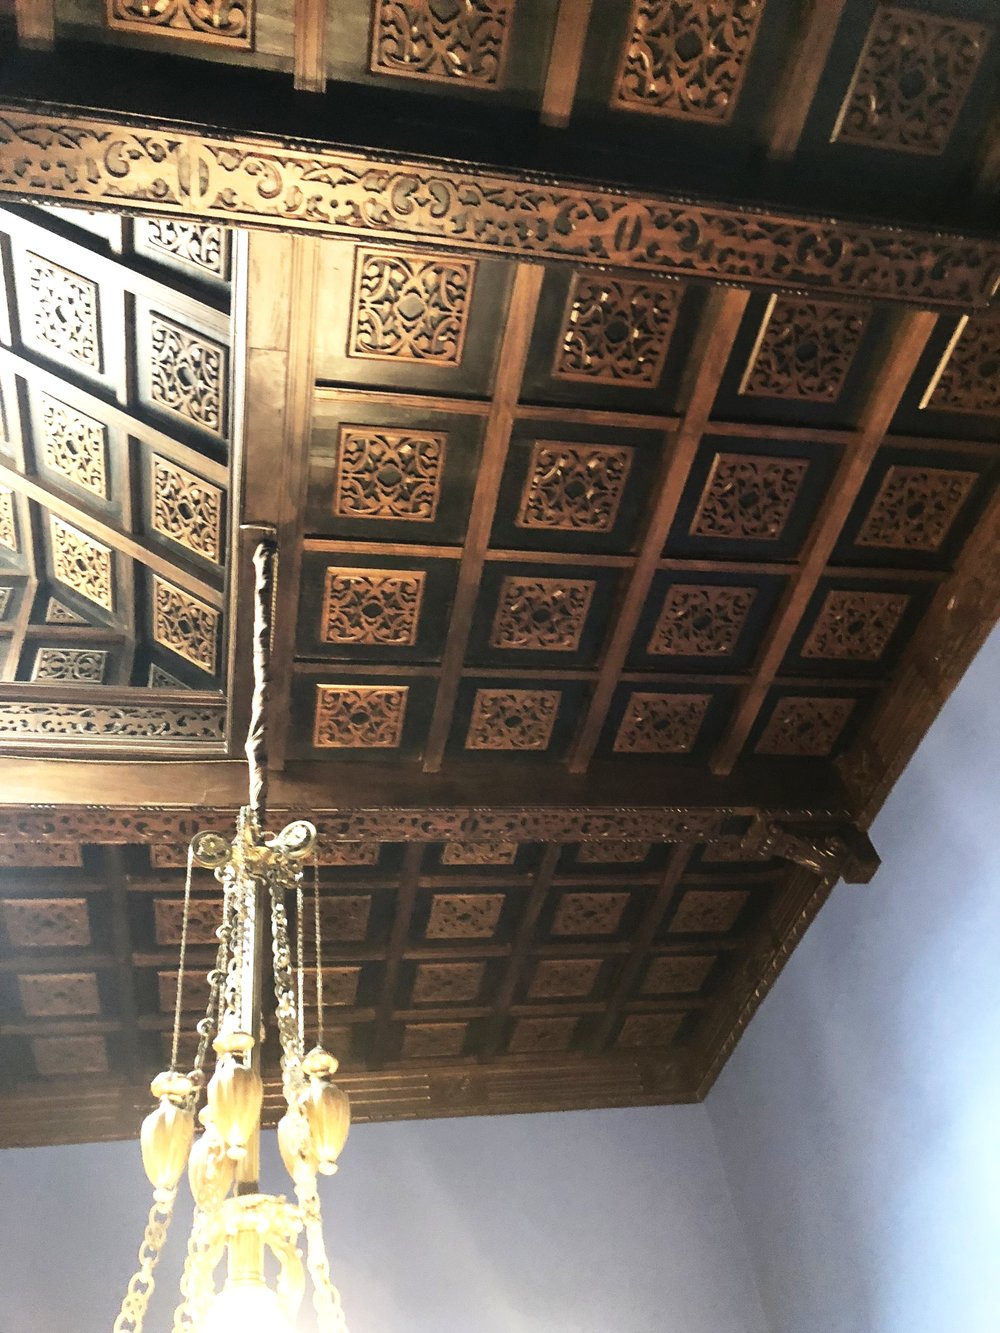 Each Room Has A Unique Ceiling Pattern